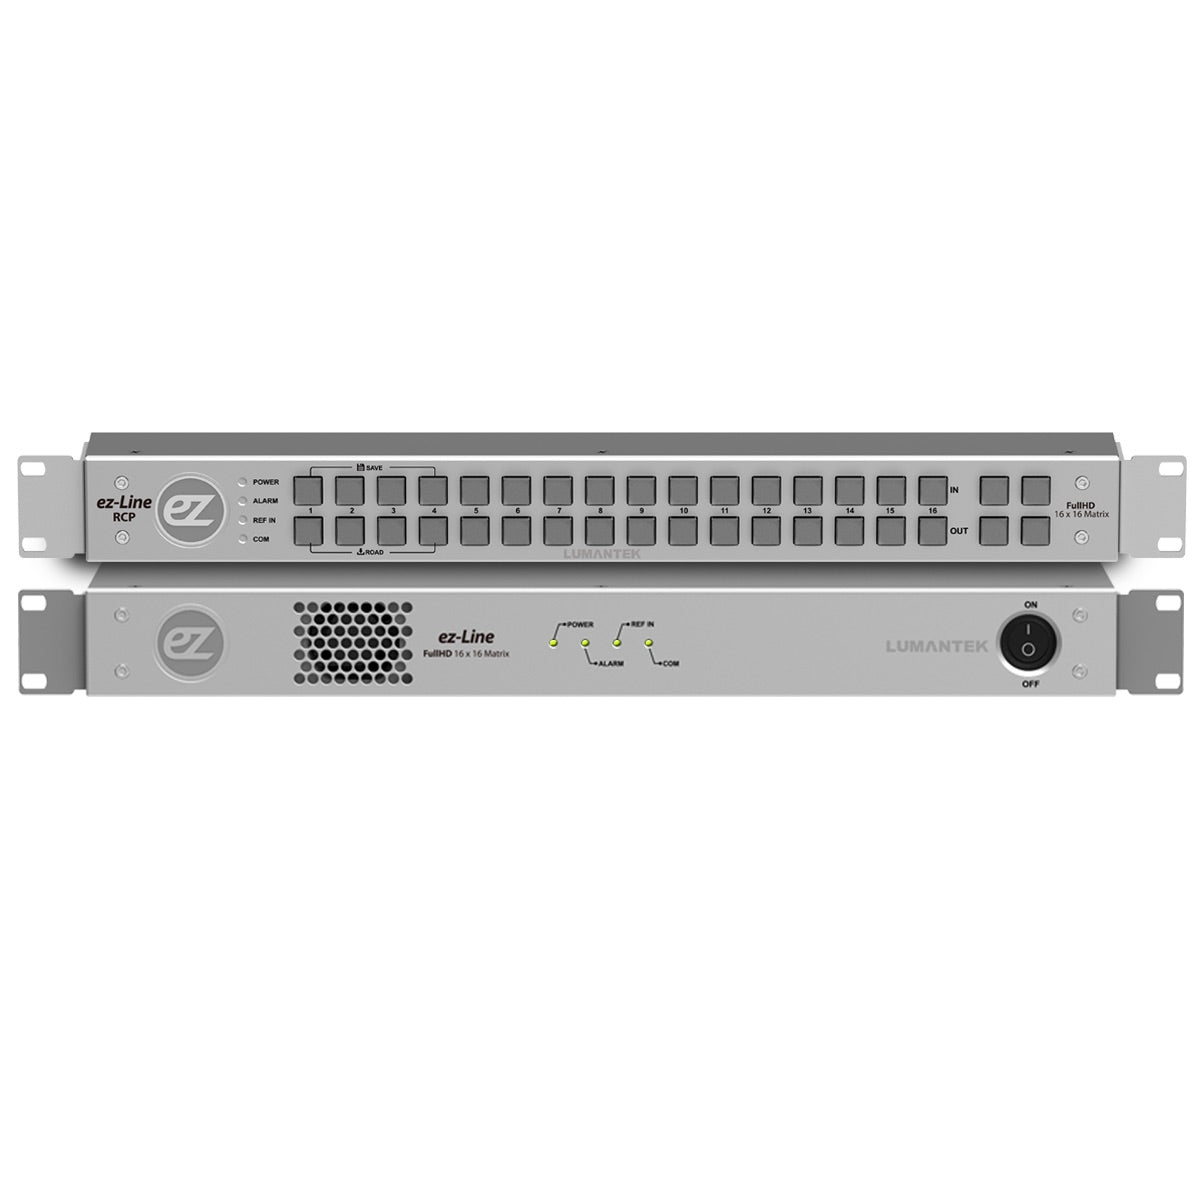 Lumantek ez-Line VM16 FullHD 16x16 Matrix SDI Video Router, combo